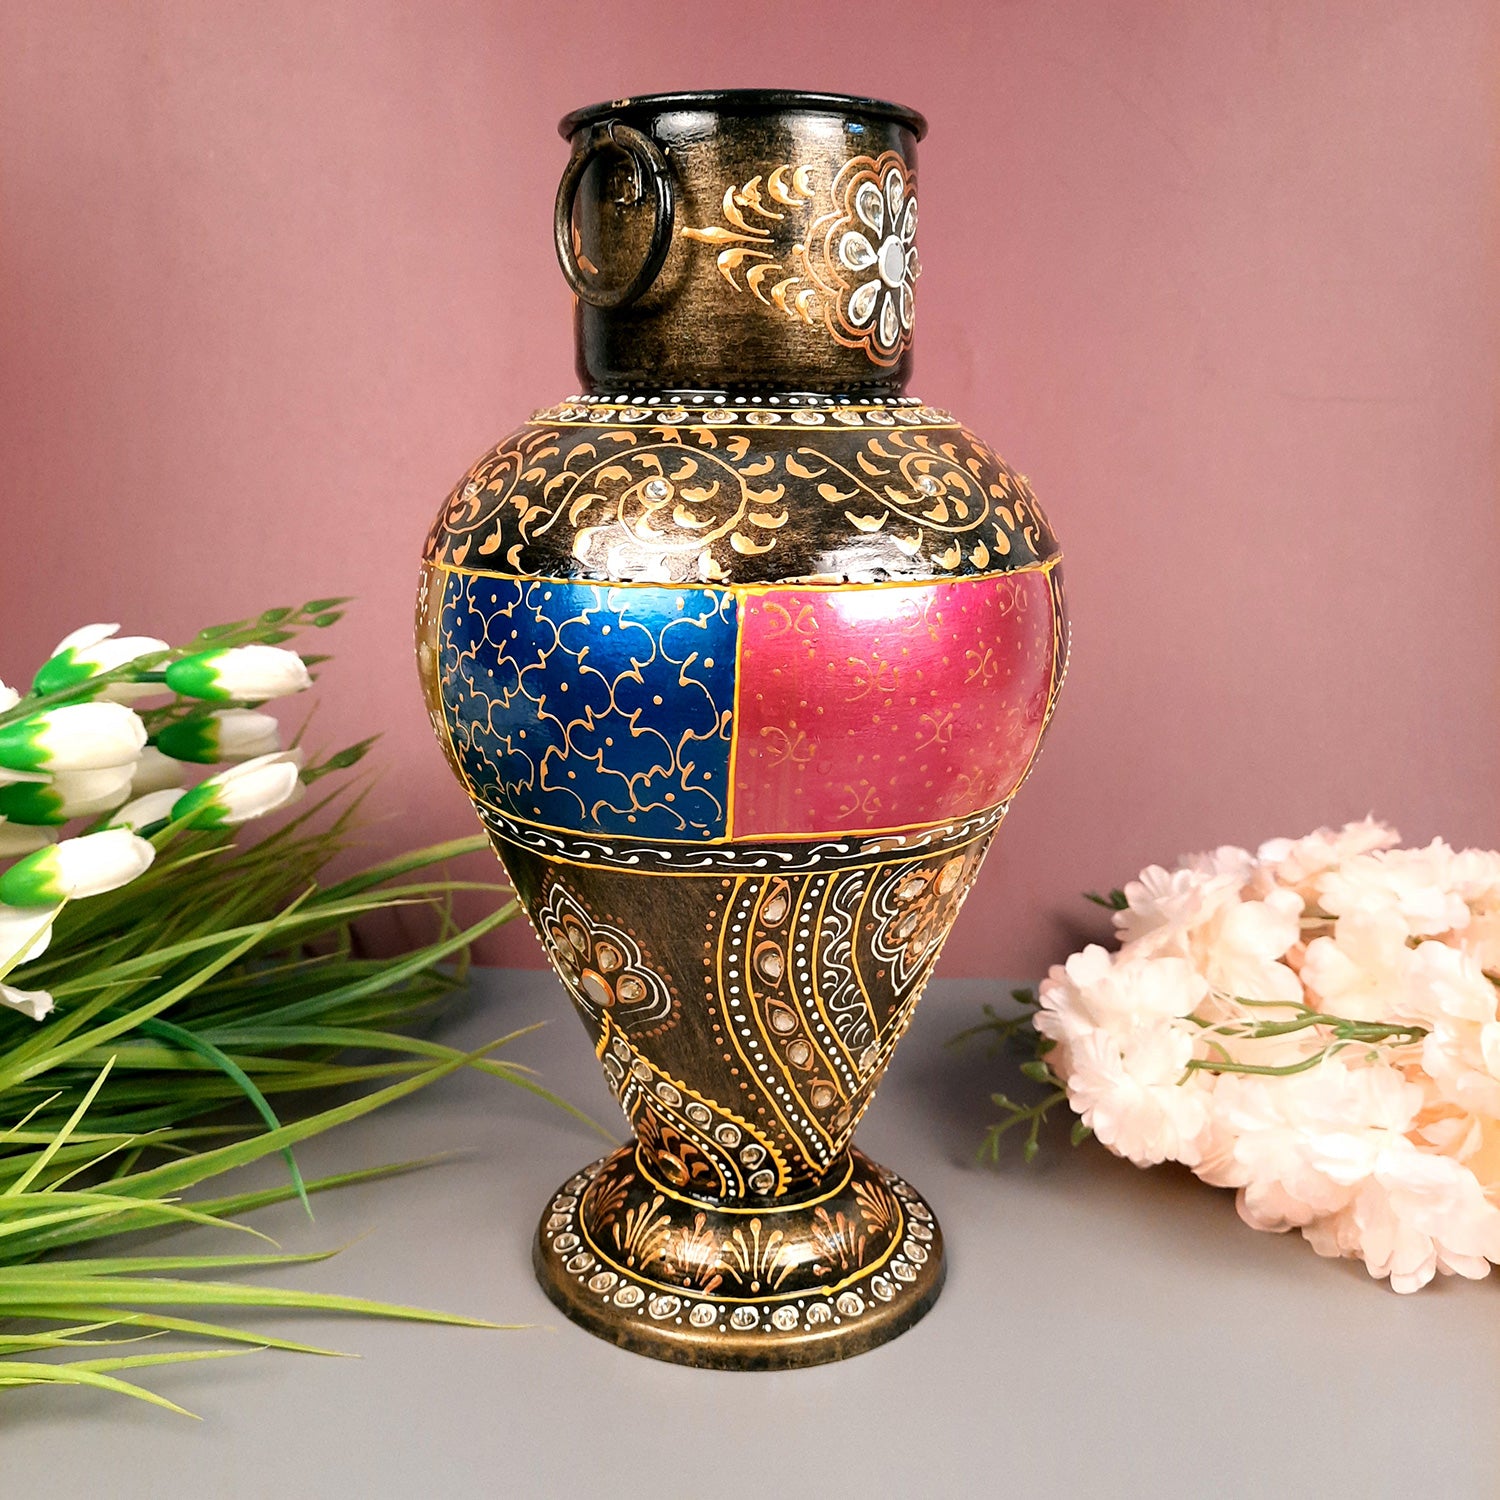 Flower Vase | Pots for Flowers - Metal - For Tabletop, Living Room, Home & Office Decoration | Centerpiece for Table Decoration |Vases for Gifts- 12 Inch